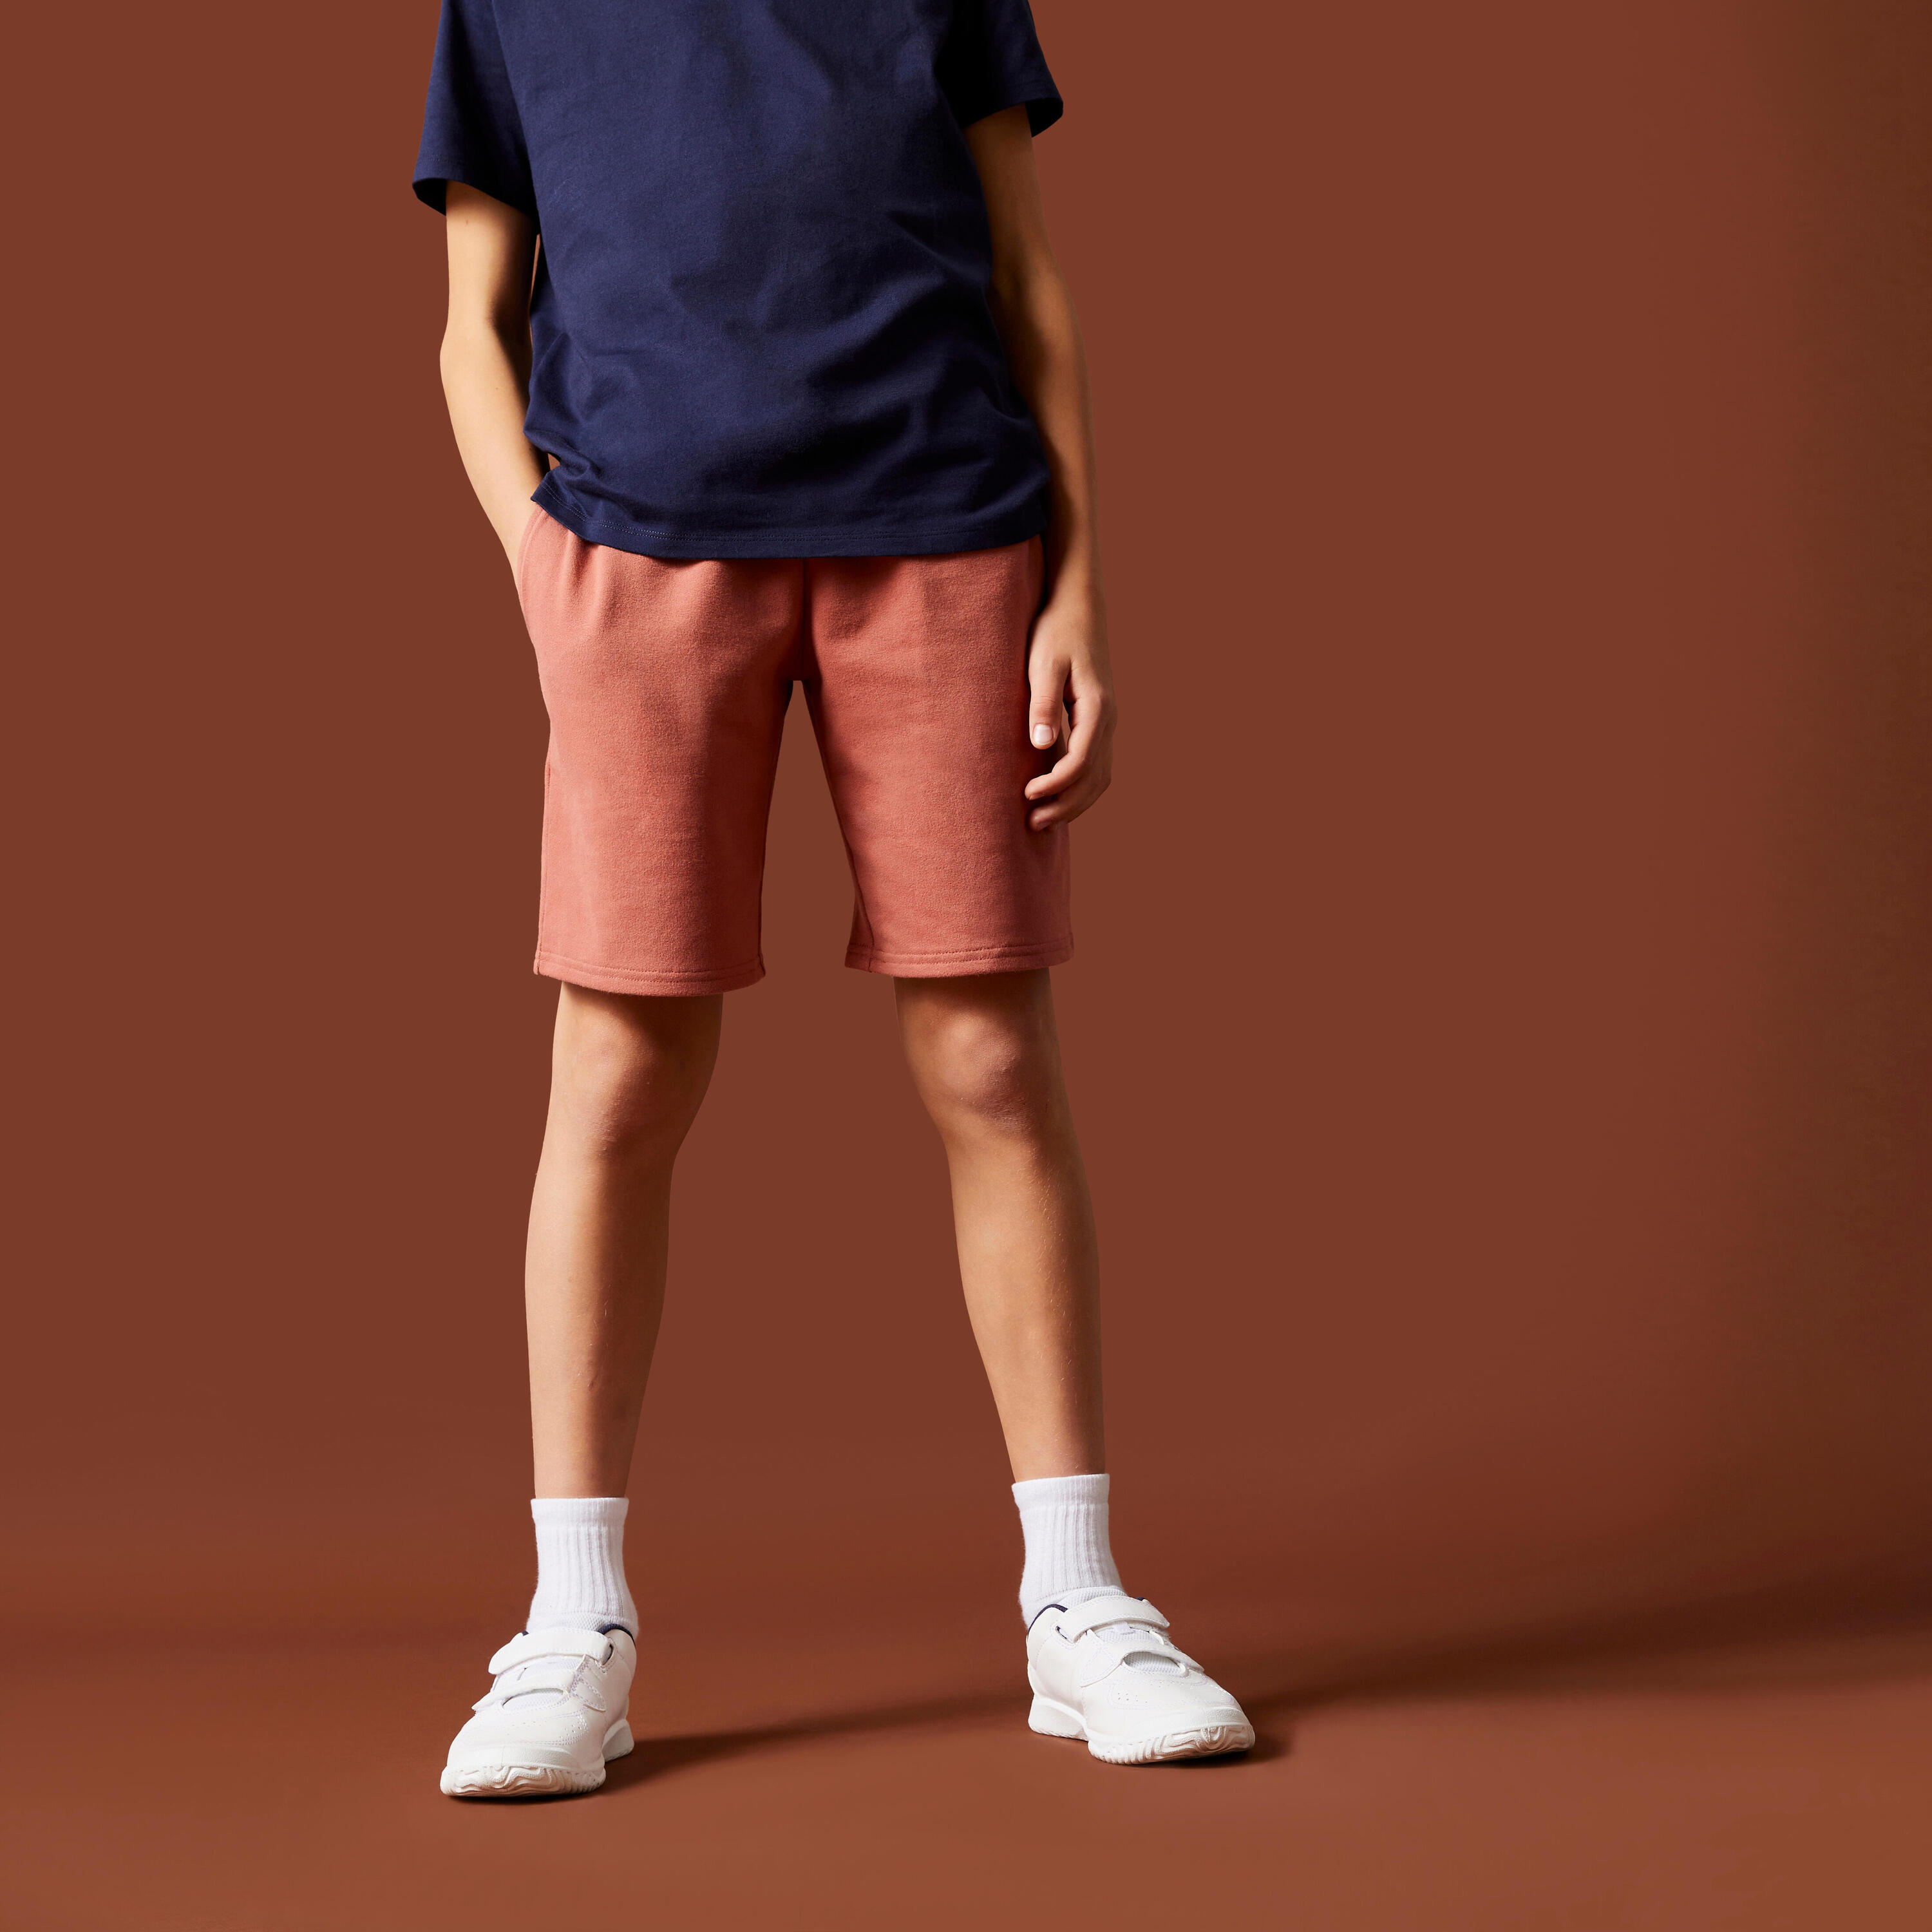 DOMYOS Kids' Unisex Cotton Shorts - Terracotta